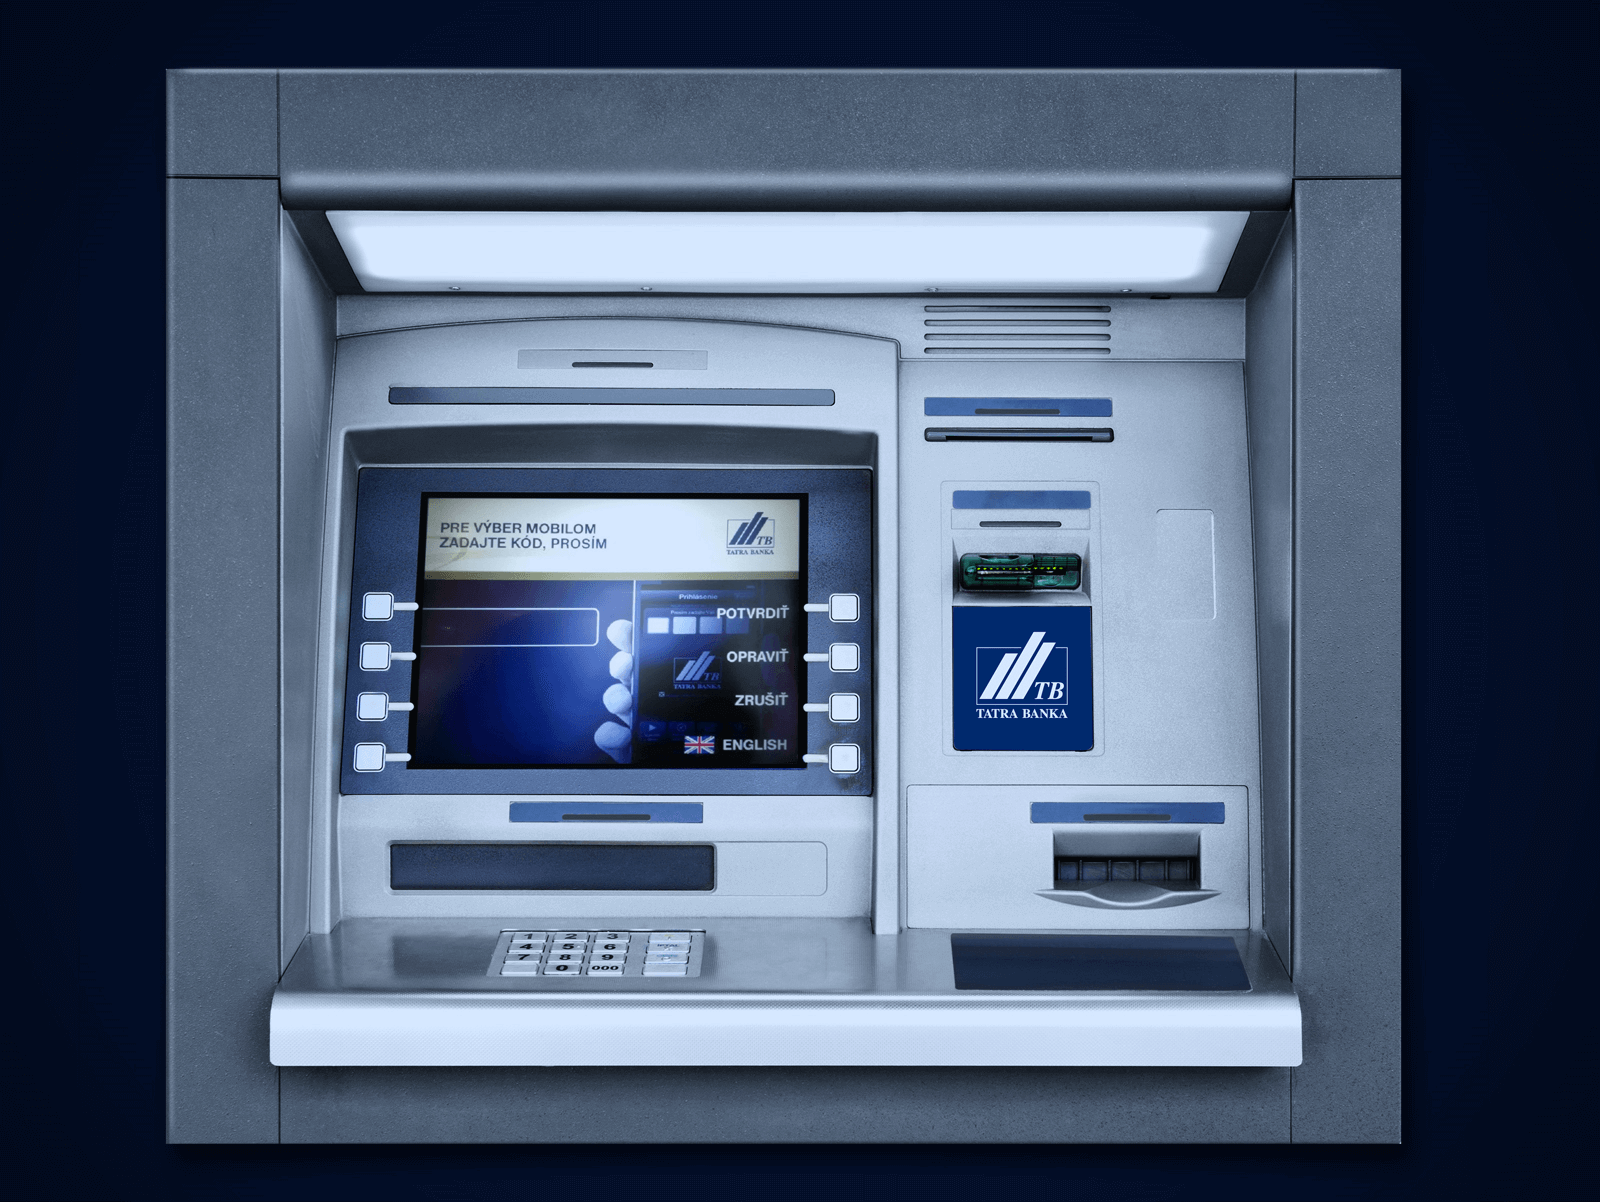 If possible, use Tatra banka ATMs